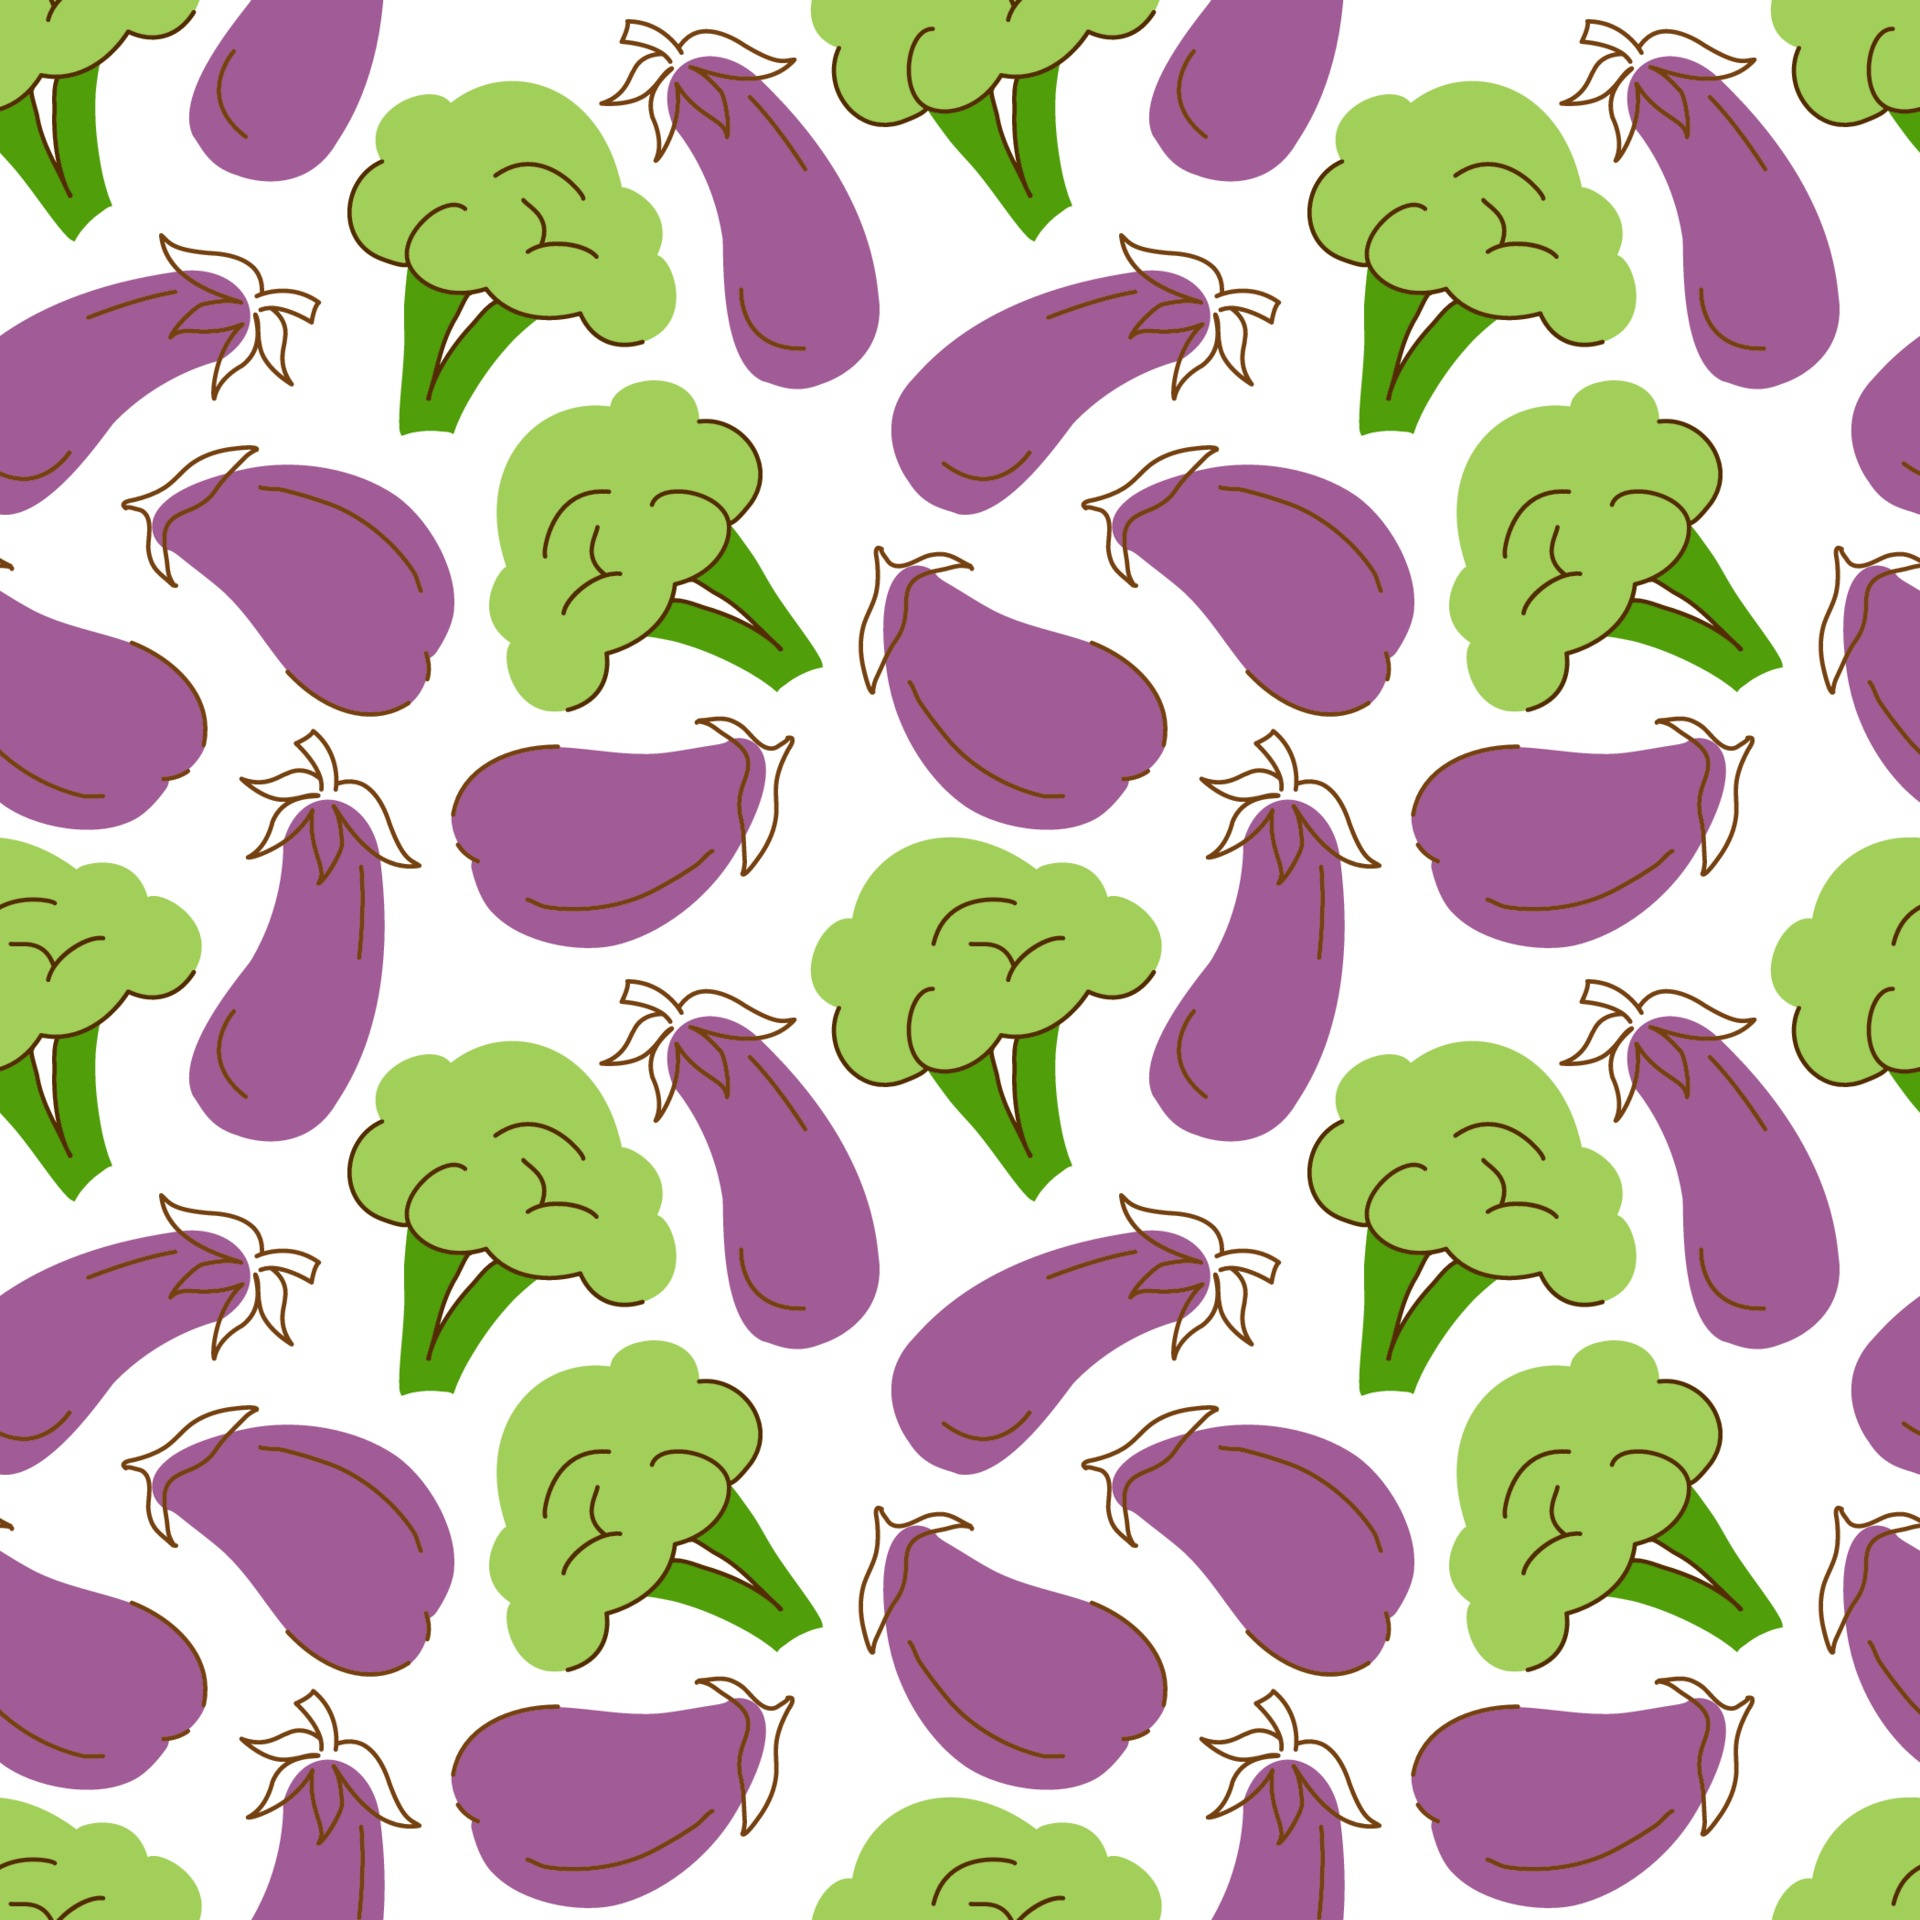 Broccoli And Eggplants Pattern Art